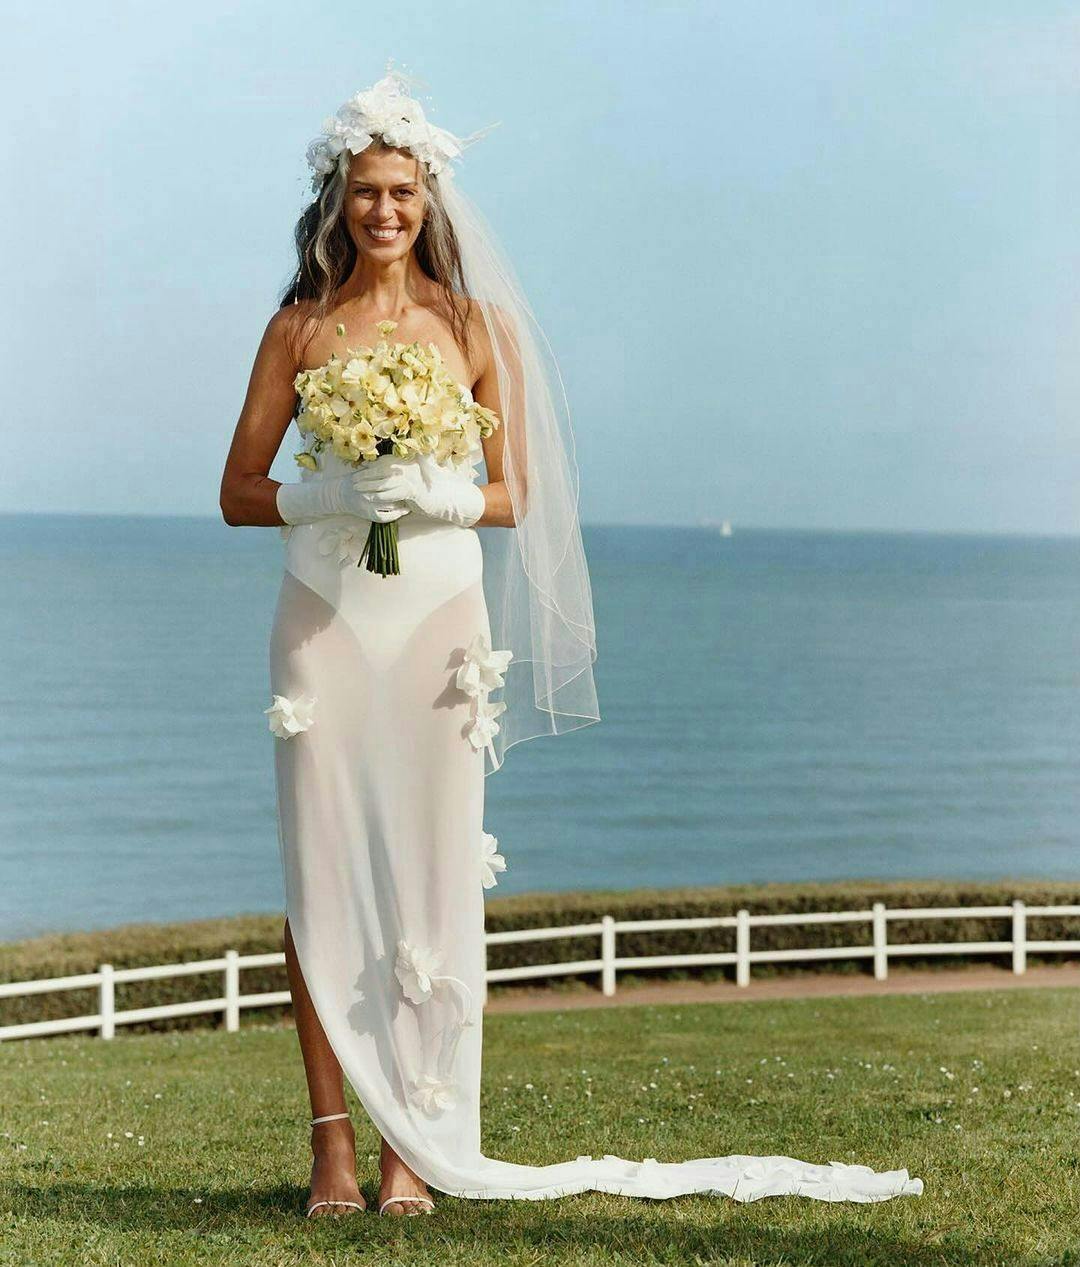 dress formal wear wedding gown beachwear adult bride female person woman glove